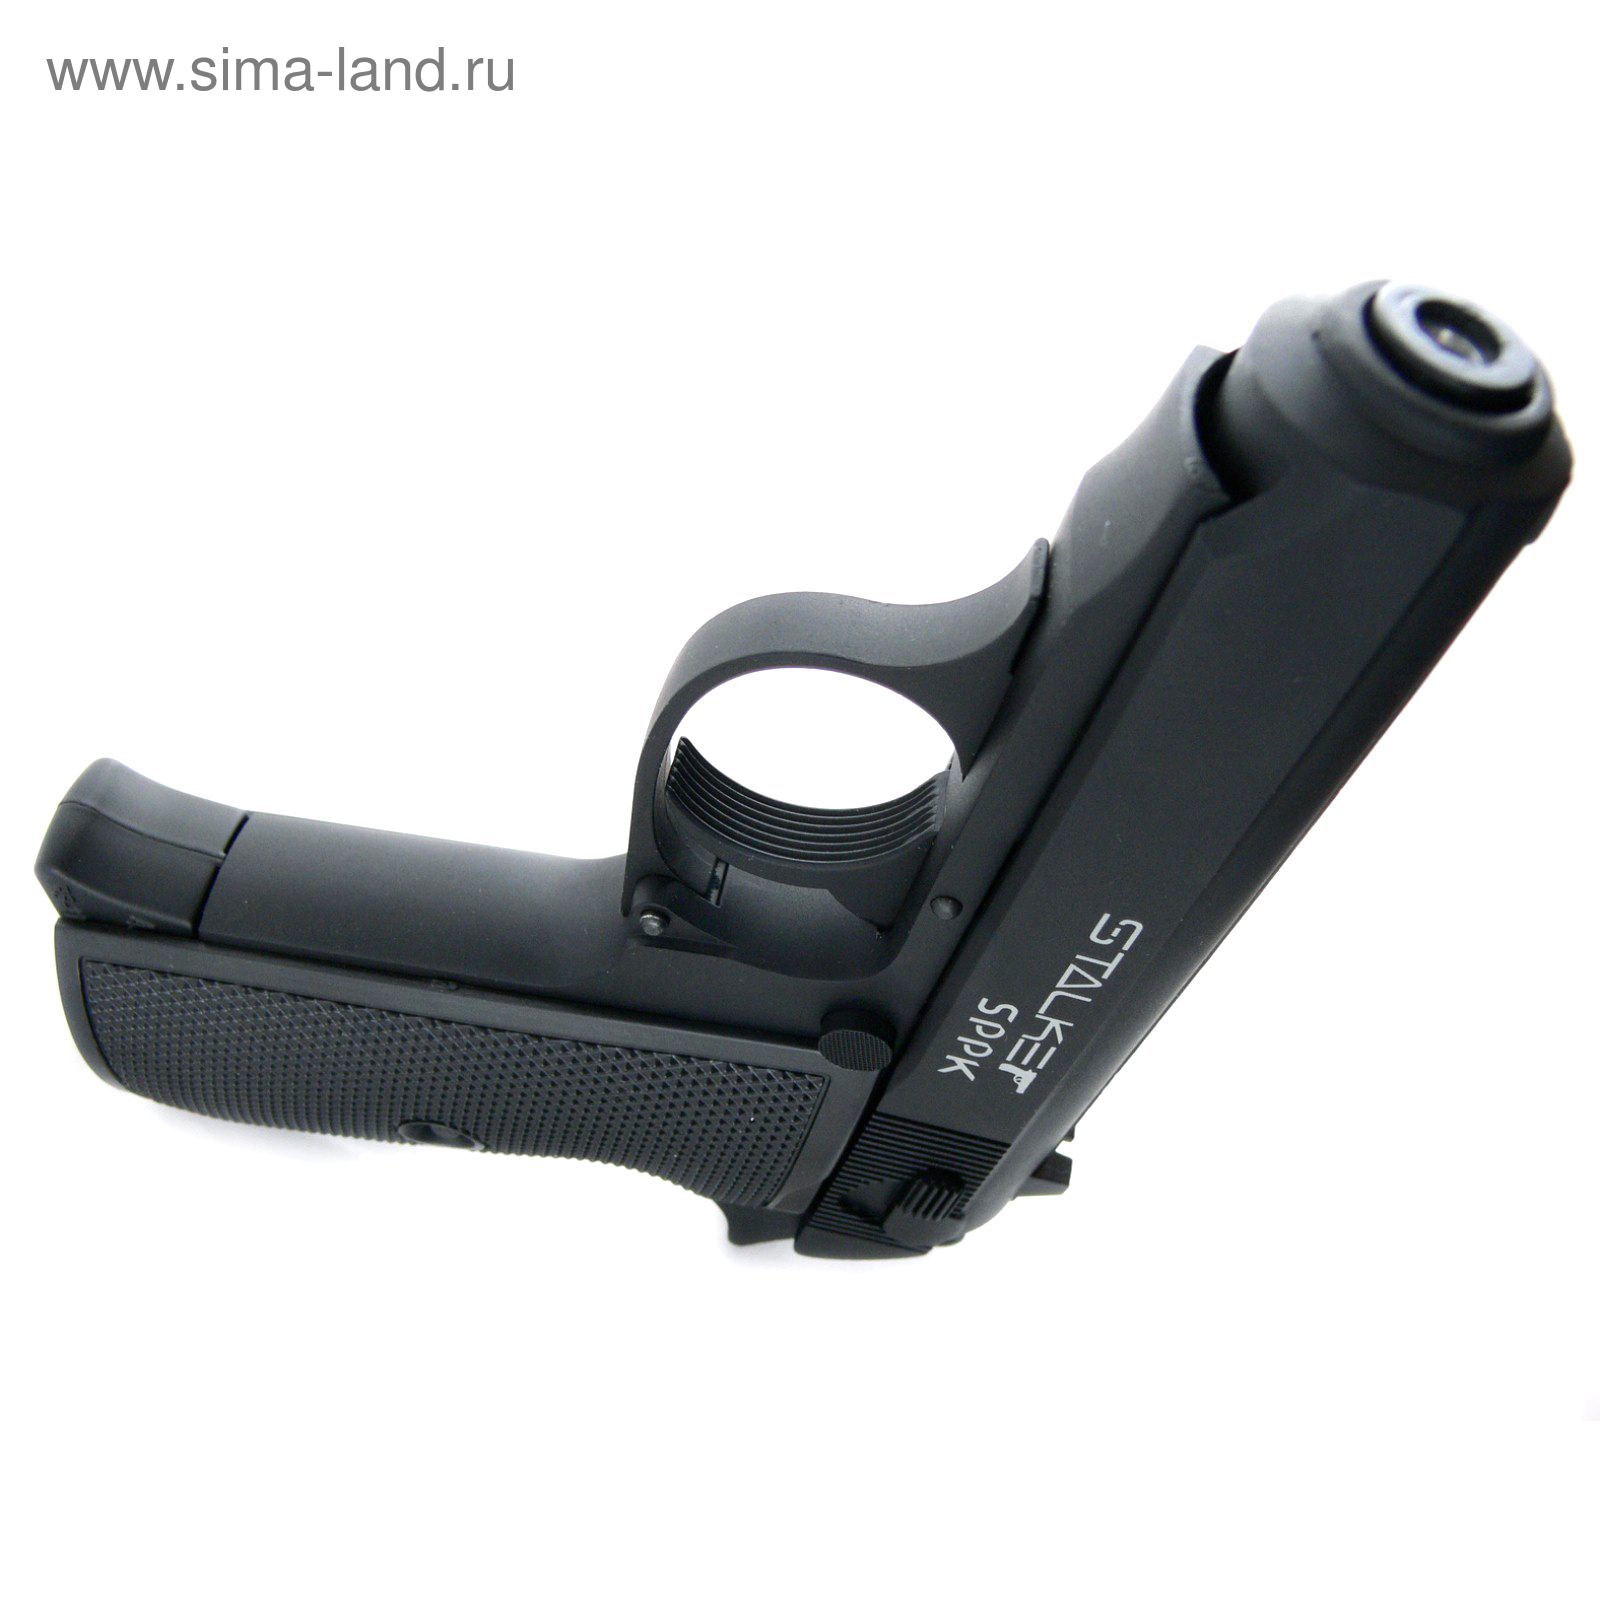 Пистолет пневм. Stalker SPPK (аналог "Walther PPK/S") к.4,5мм, металл, 120 м/с, черный, картон.короб